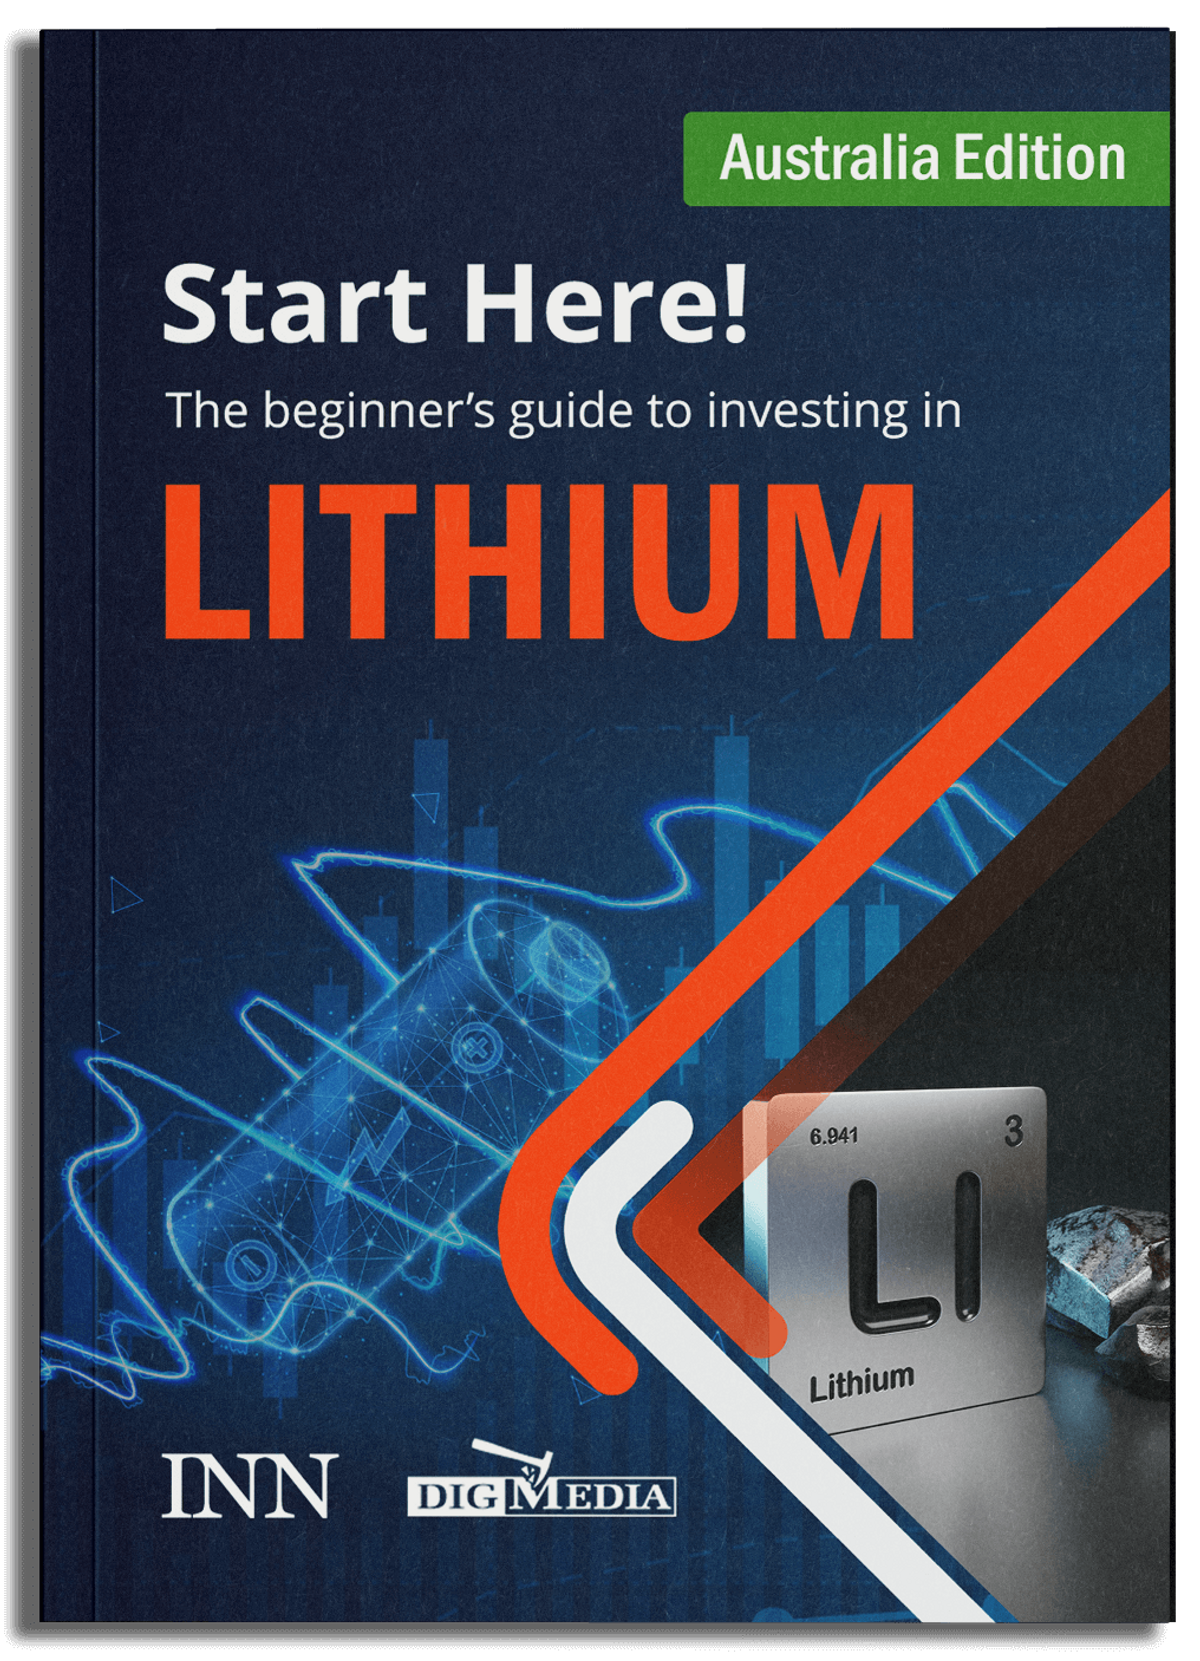 Lithium Investing Guide for Australian Investors